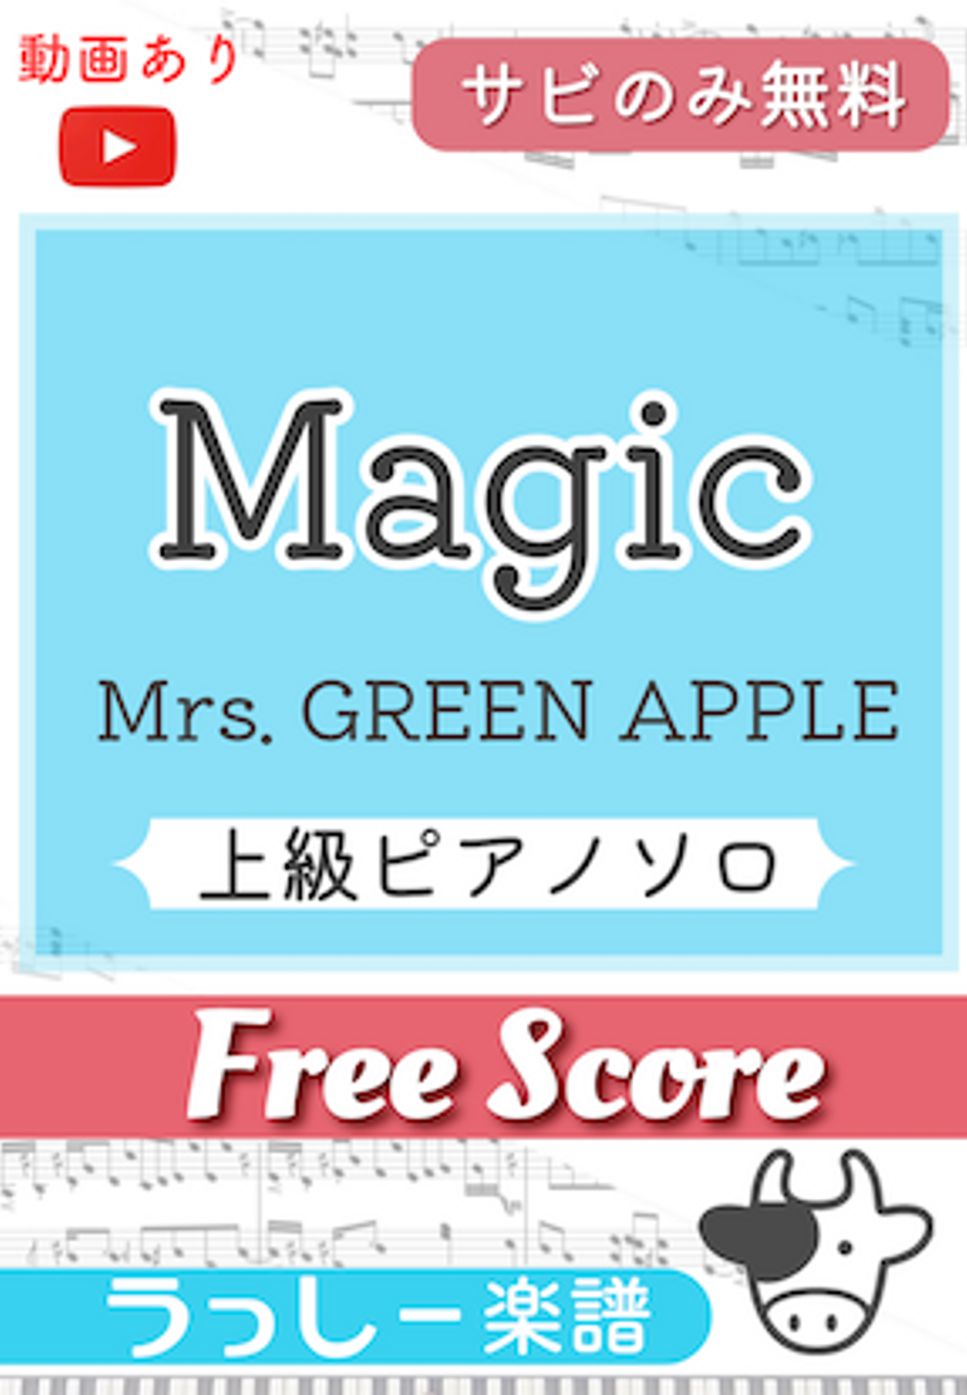 Mrs. GREEN APPLE - Magic (サビのみ無料) by 牛武奏人